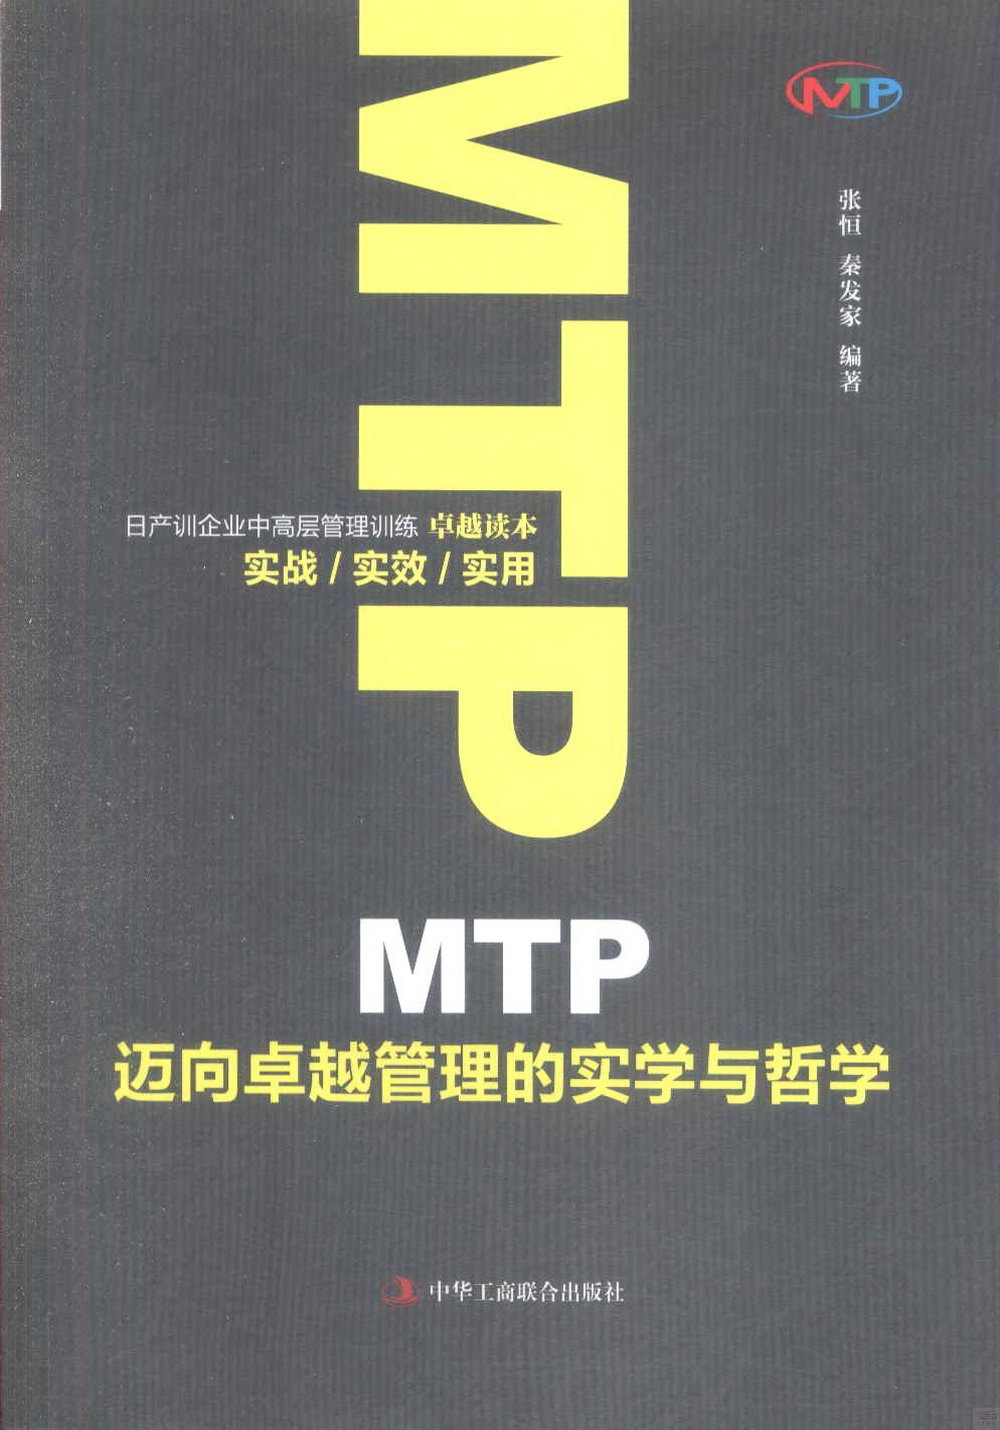 MTP邁向卓越管理的實學與哲學